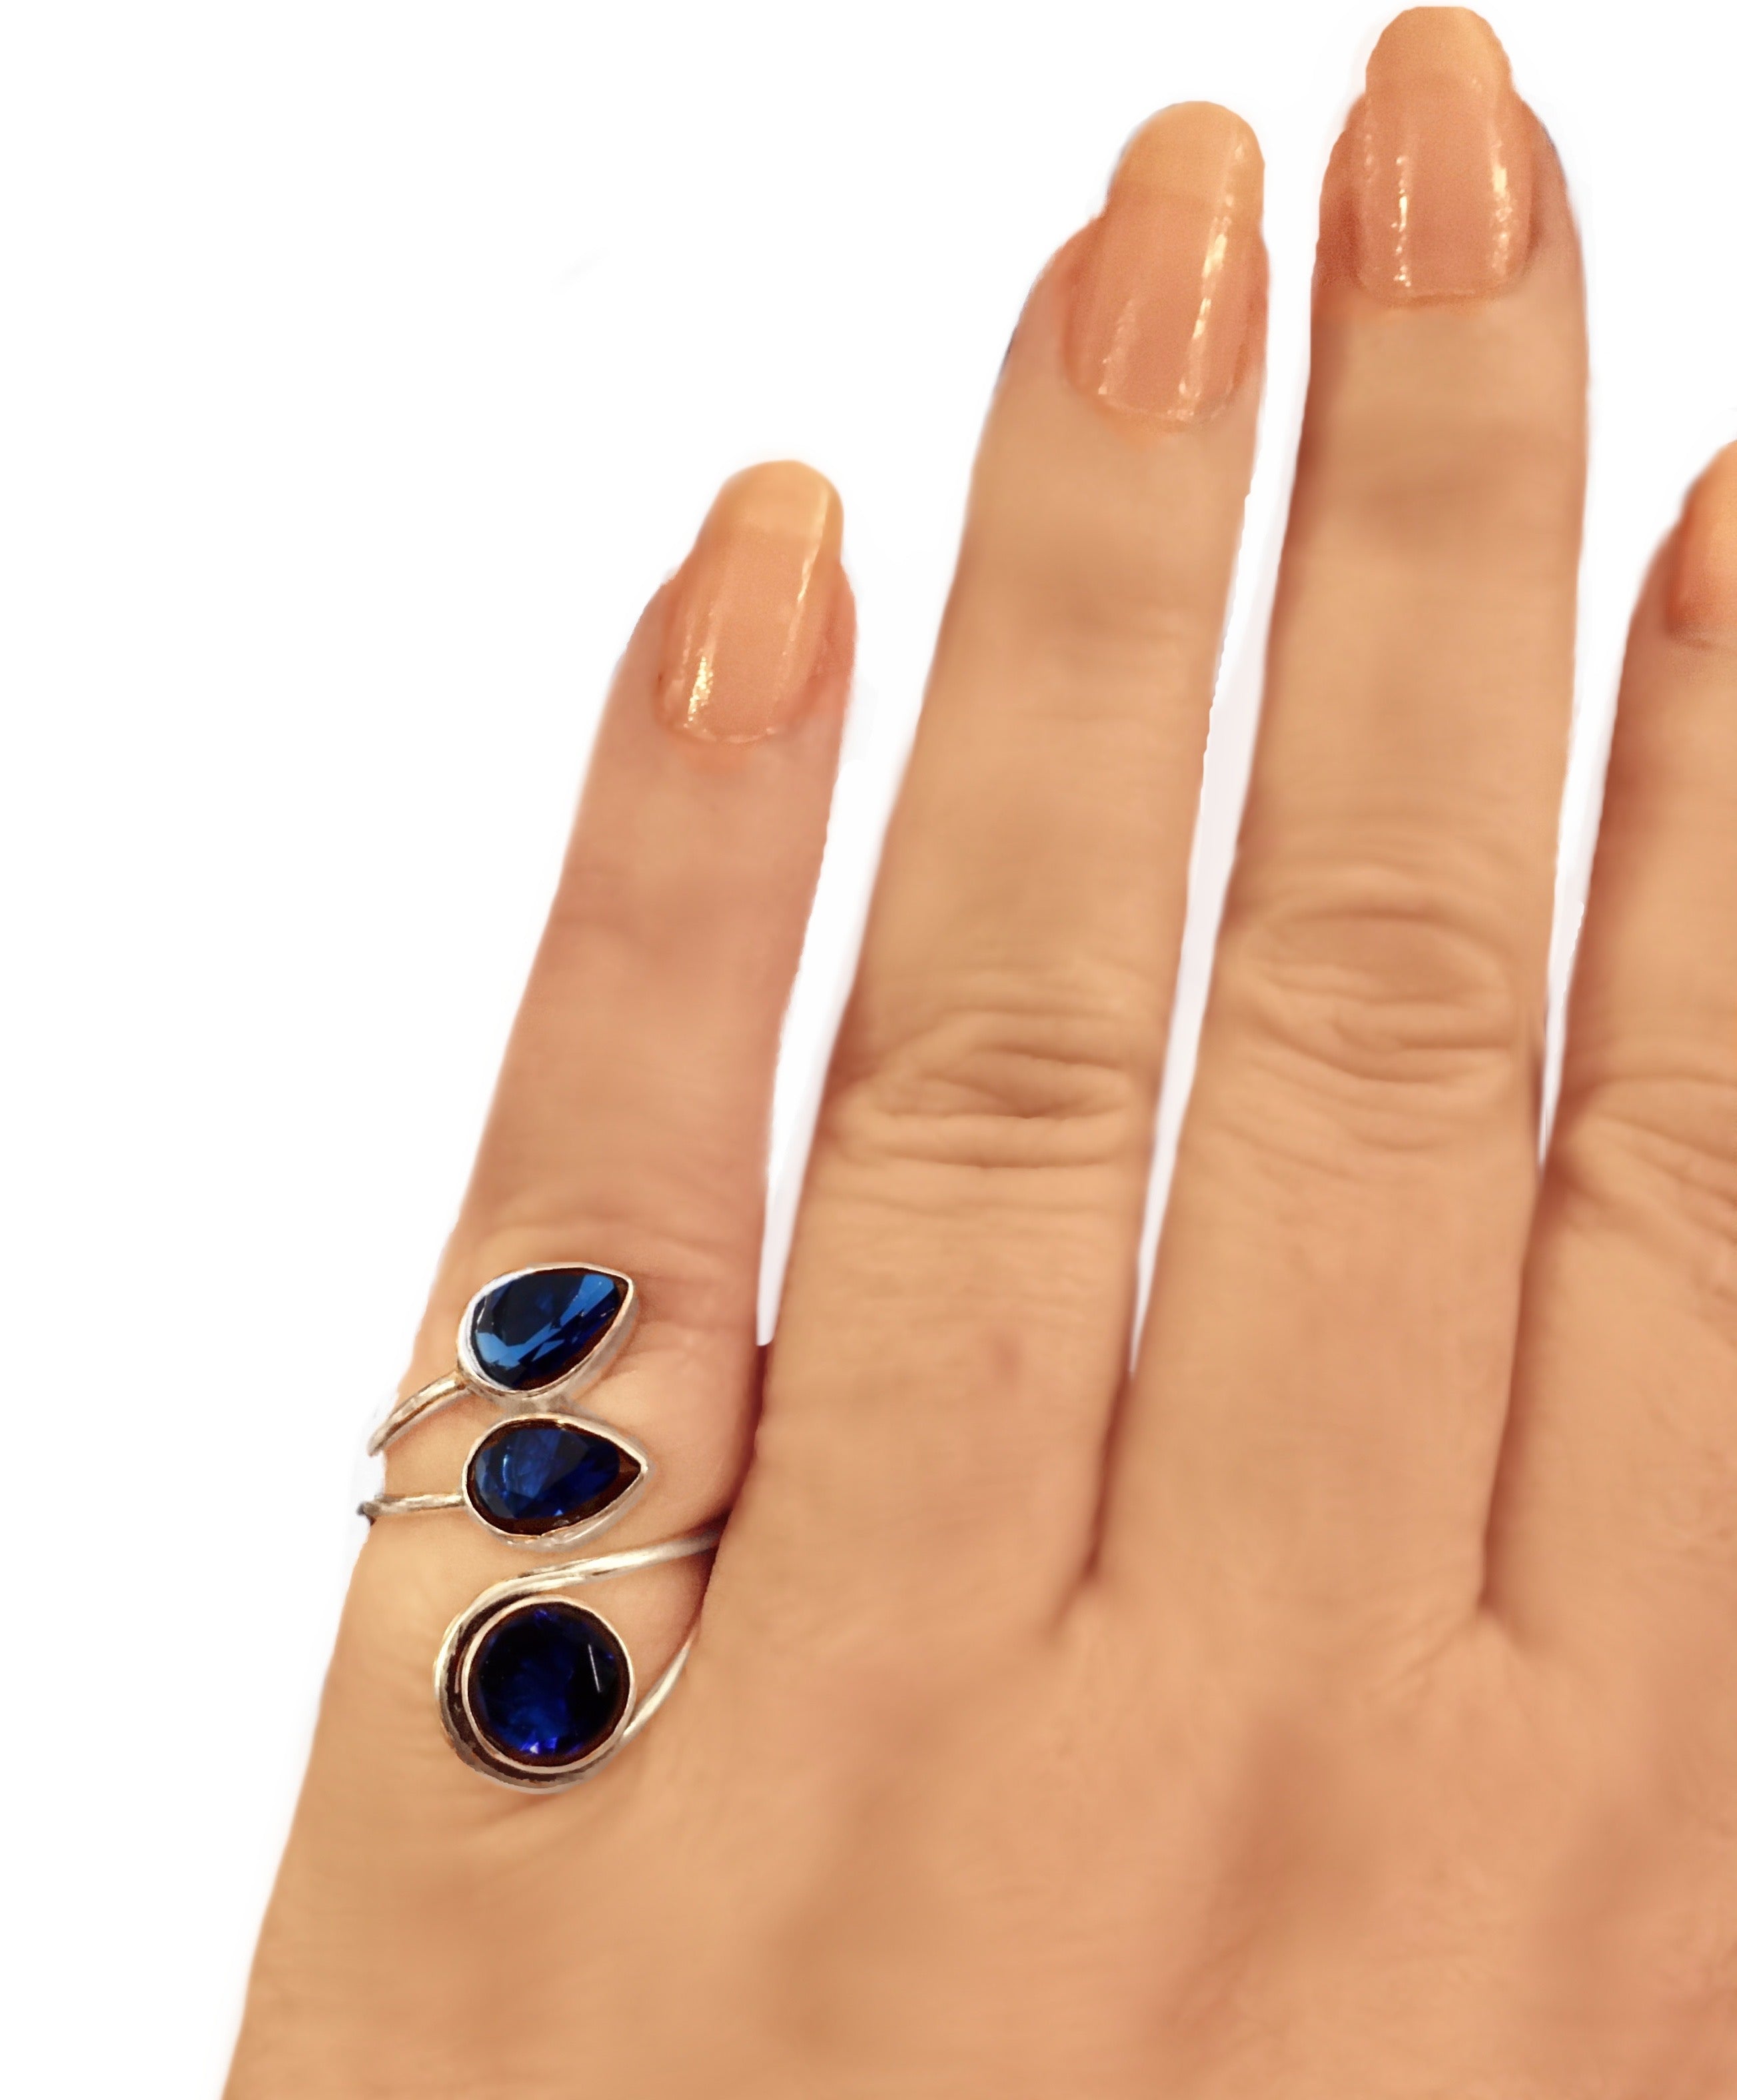 Handmade Sapphire Quartz, Gemstone .925 Silver Ring Size US 7.5 Adjustable - BELLADONNA